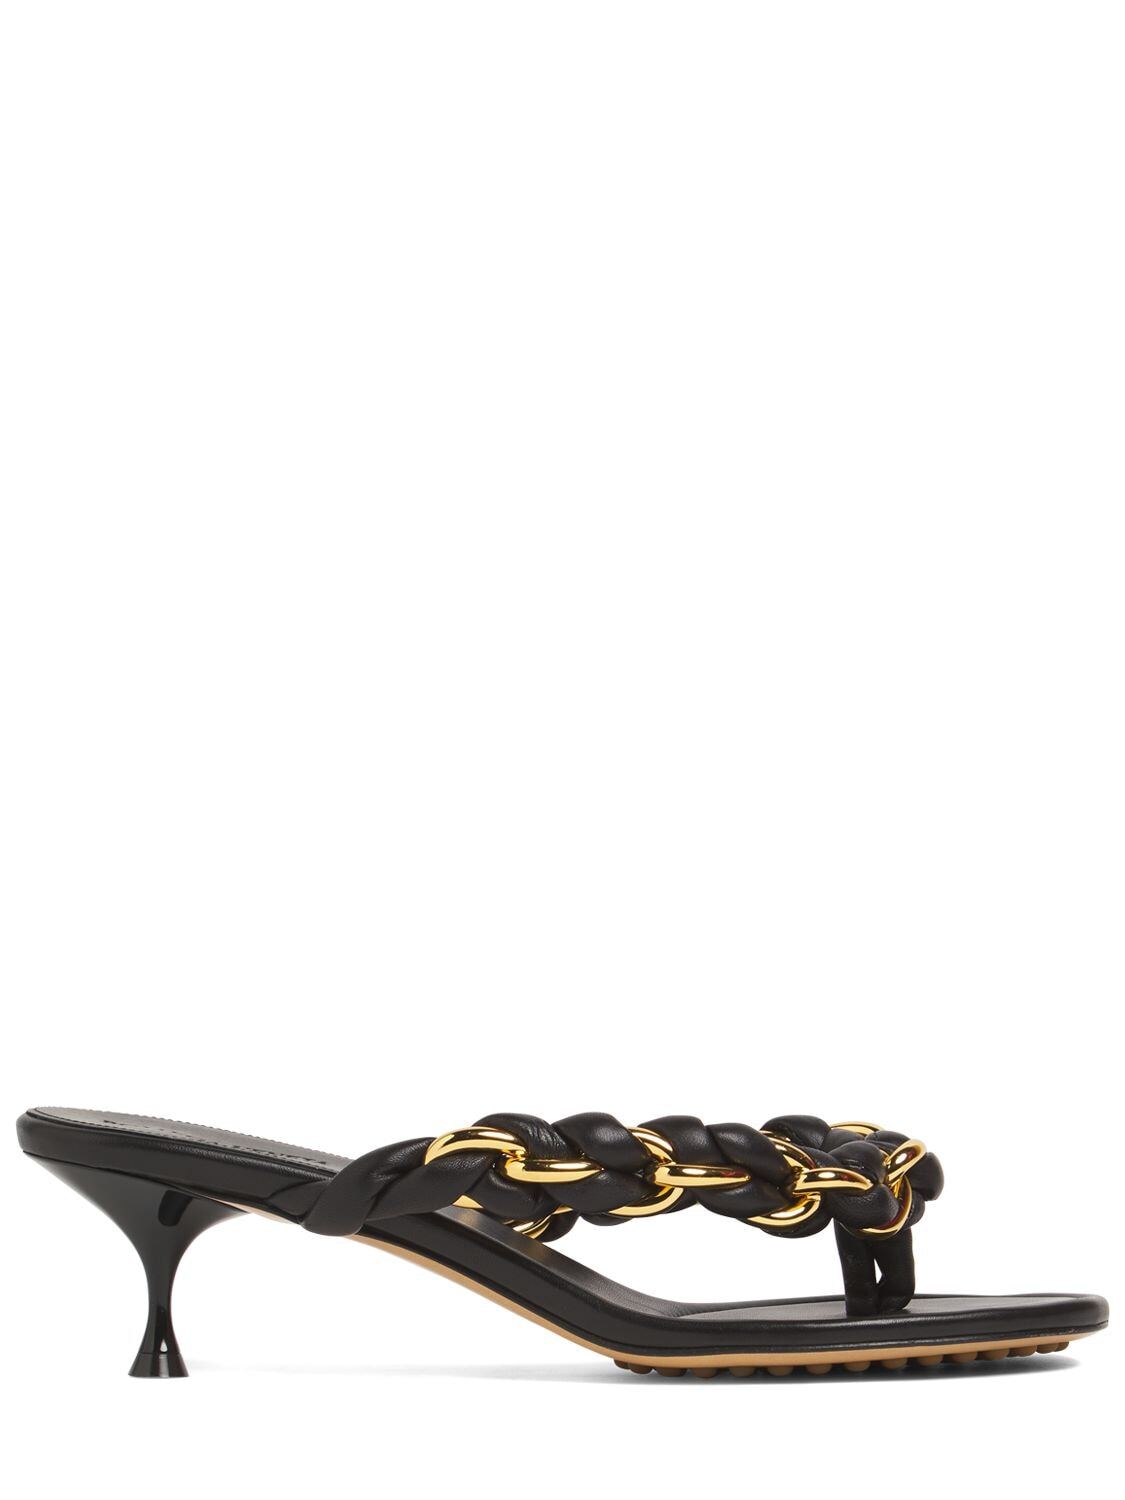 BOTTEGA VENETA 55mm Chain Dot Sandals in black